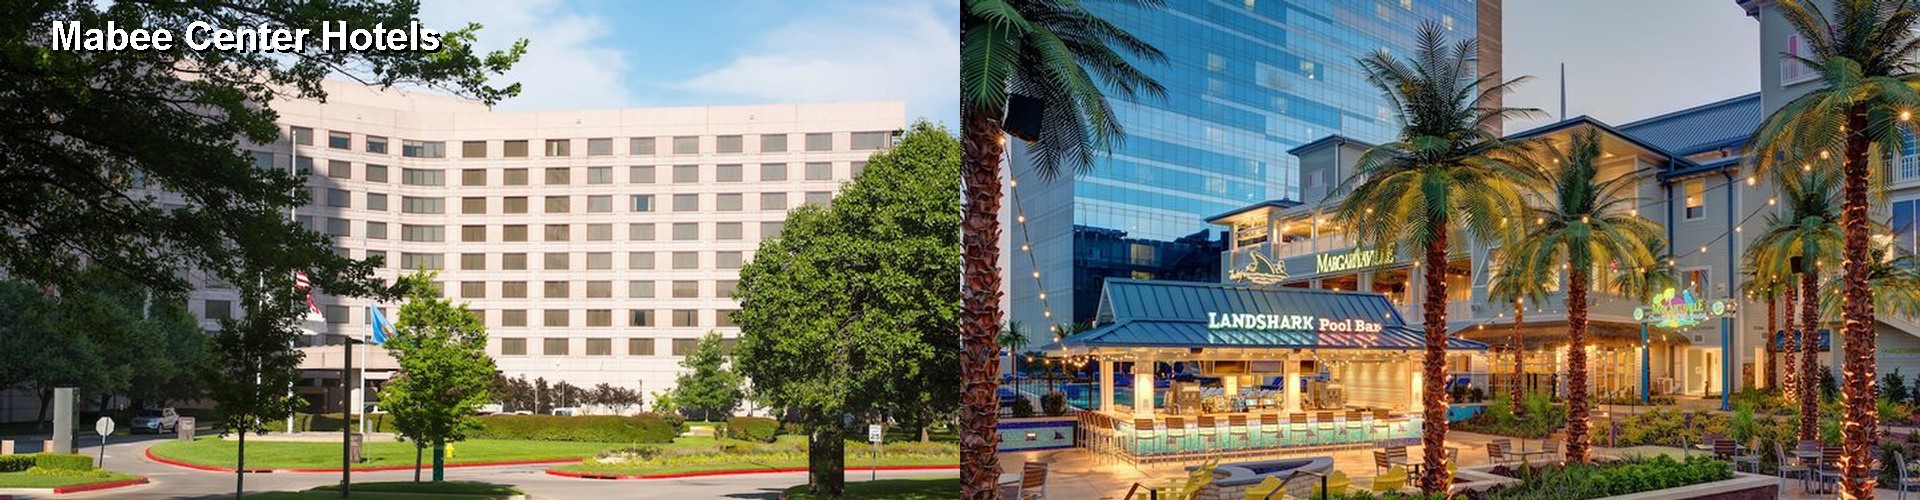 5 Best Hotels near Mabee Center